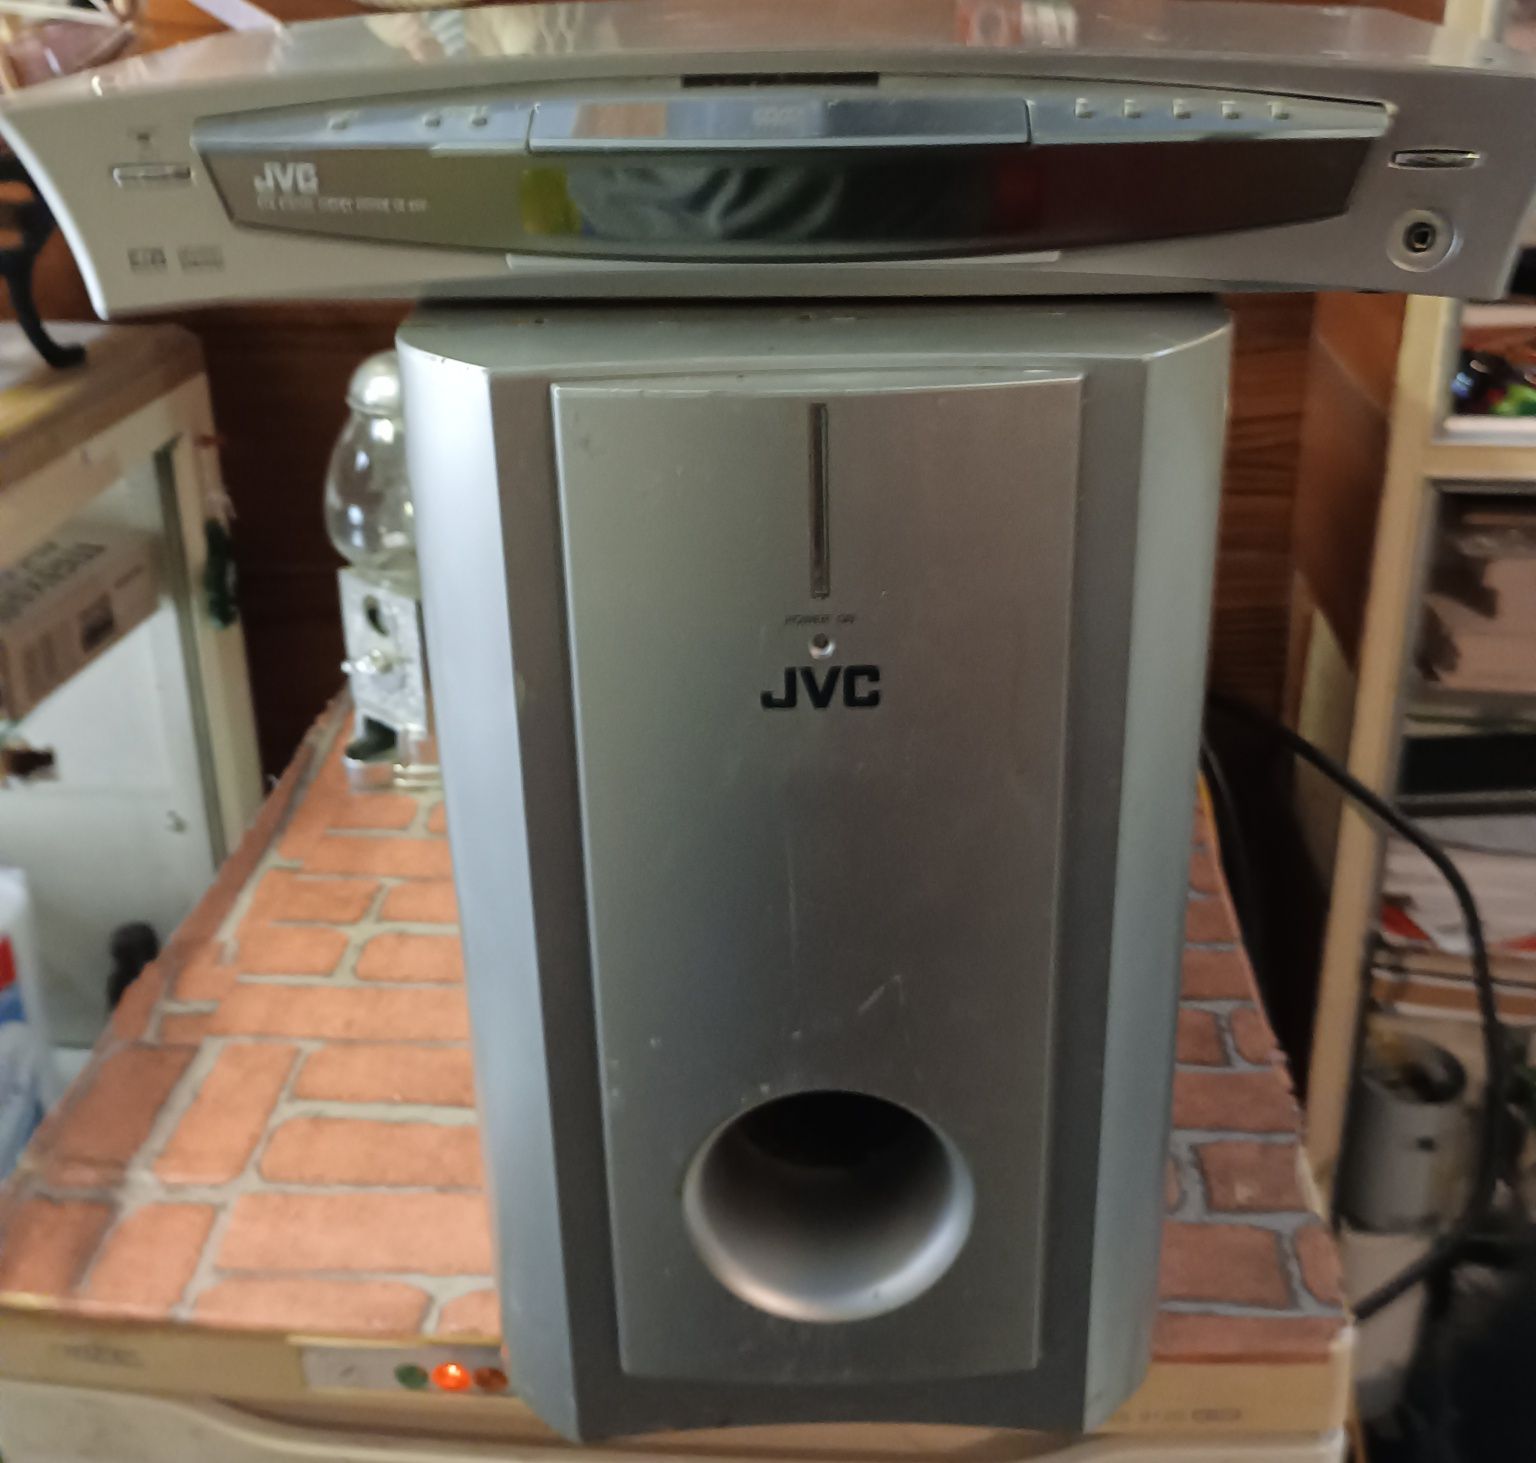 Aparelho JVC DVD player